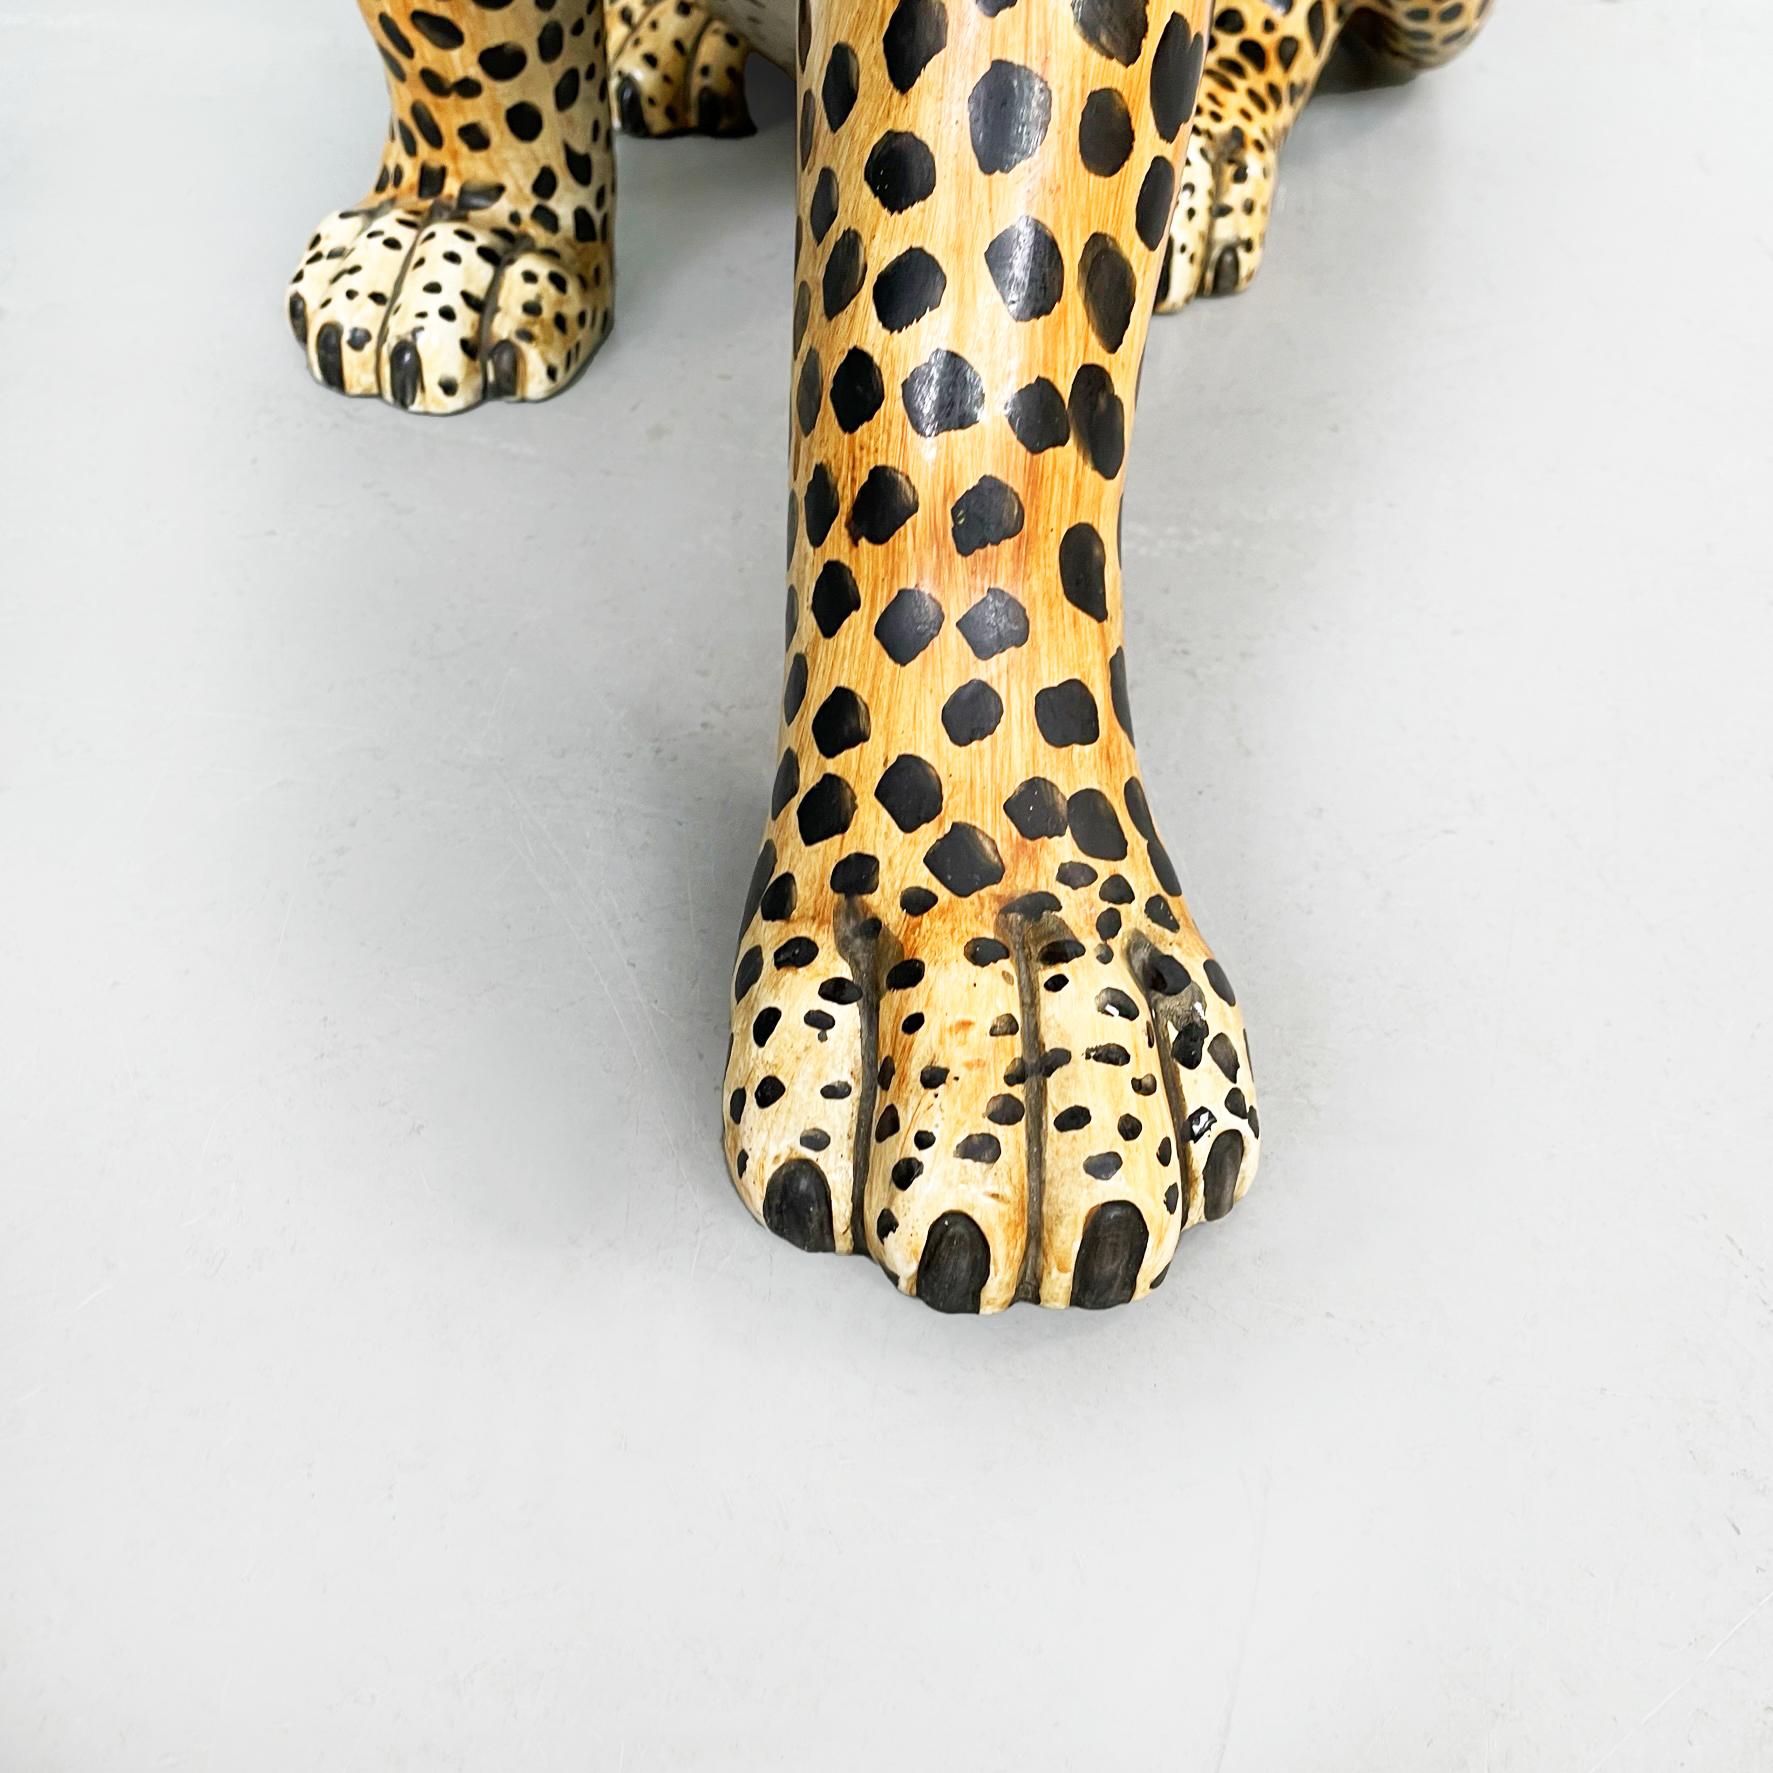 Italian Mid-Century Modern Ceramic Statue of a Feline Animal Cheetah, 1960s For Sale 7